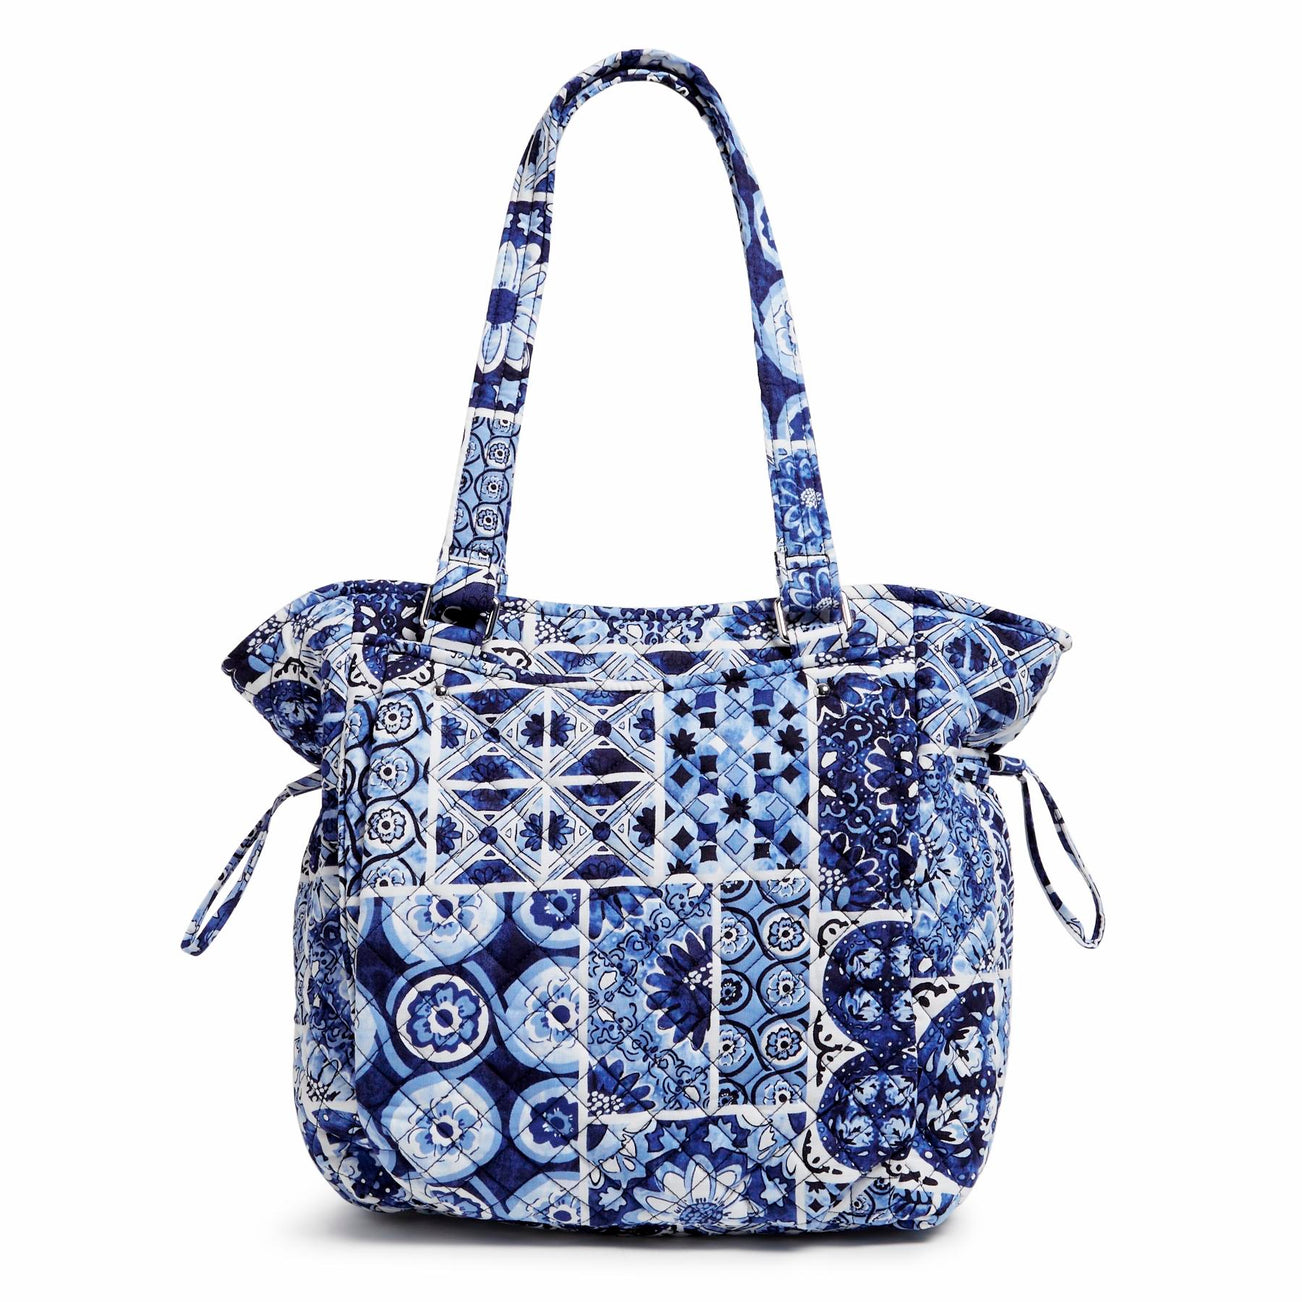 Vera Bradley Glenna Satchel Bag In Island Tile Blue.